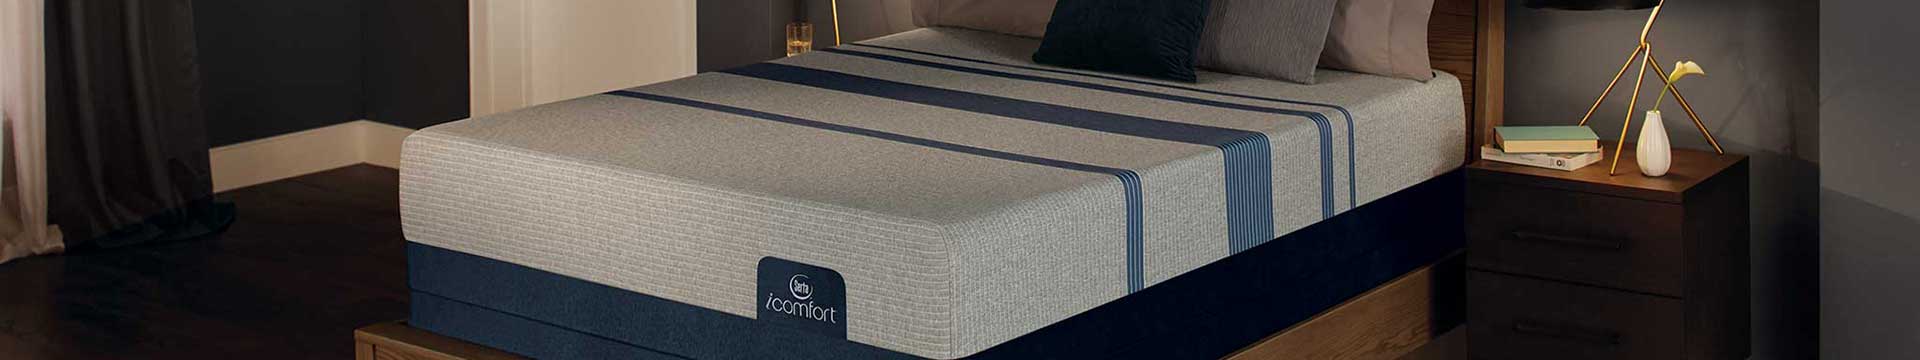 Serta iComfort mattress